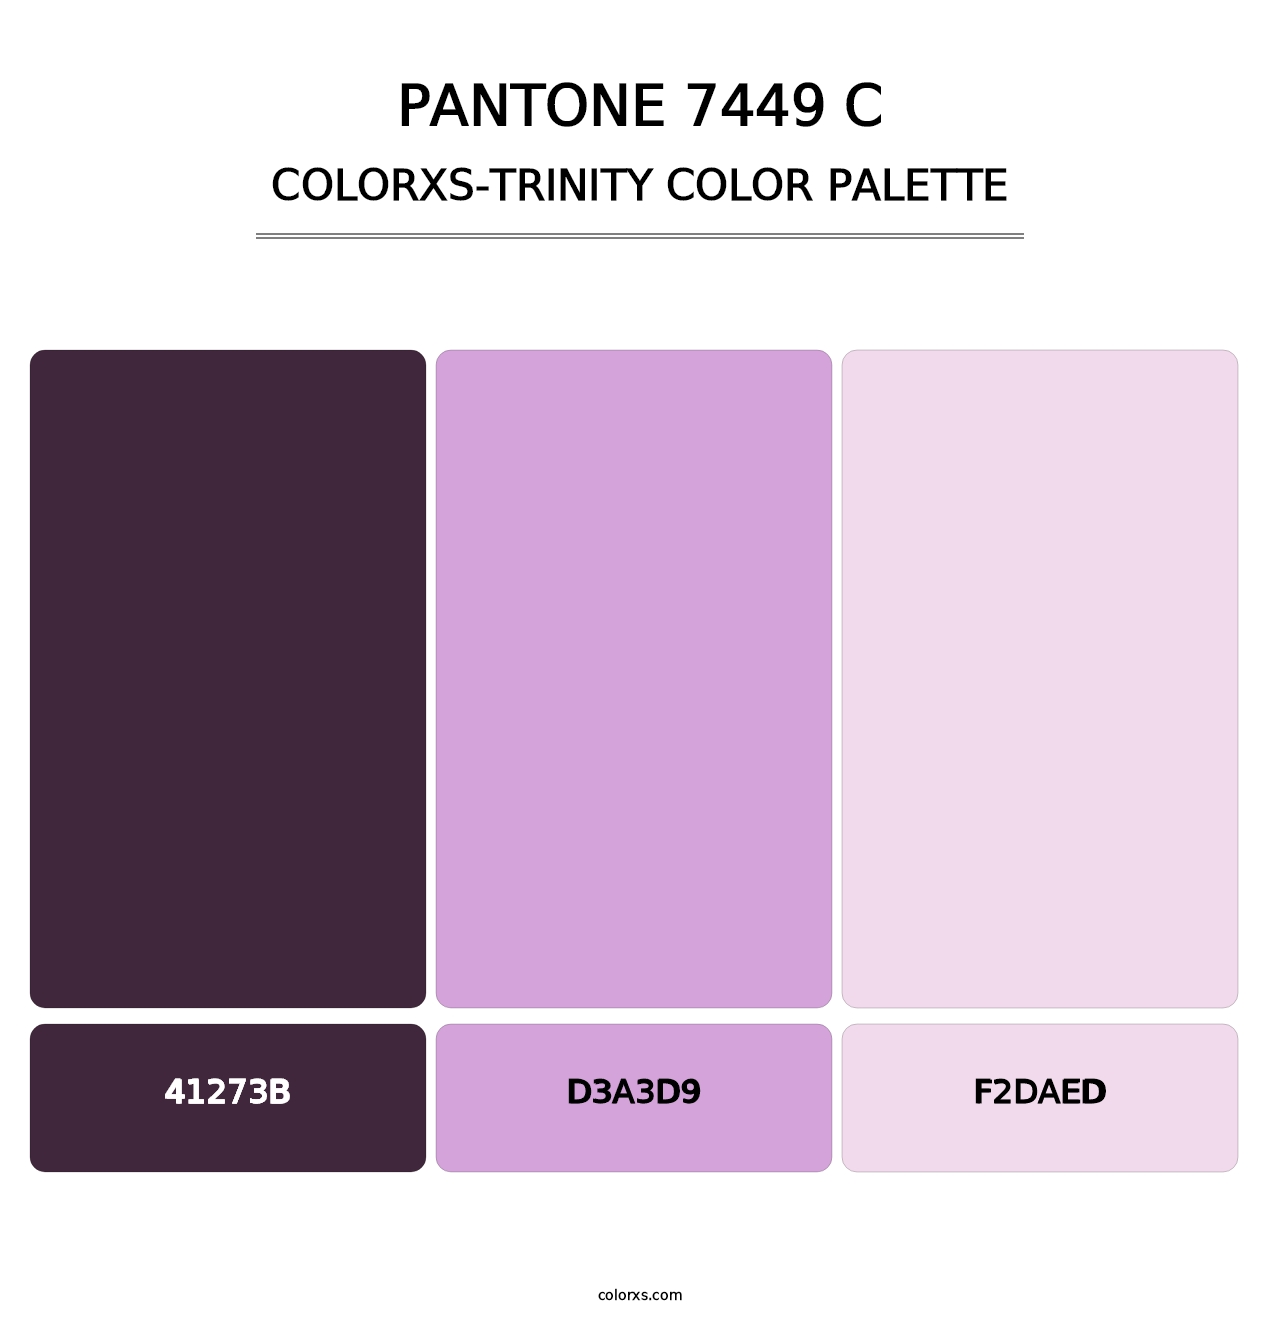 PANTONE 7449 C - Colorxs Trinity Palette